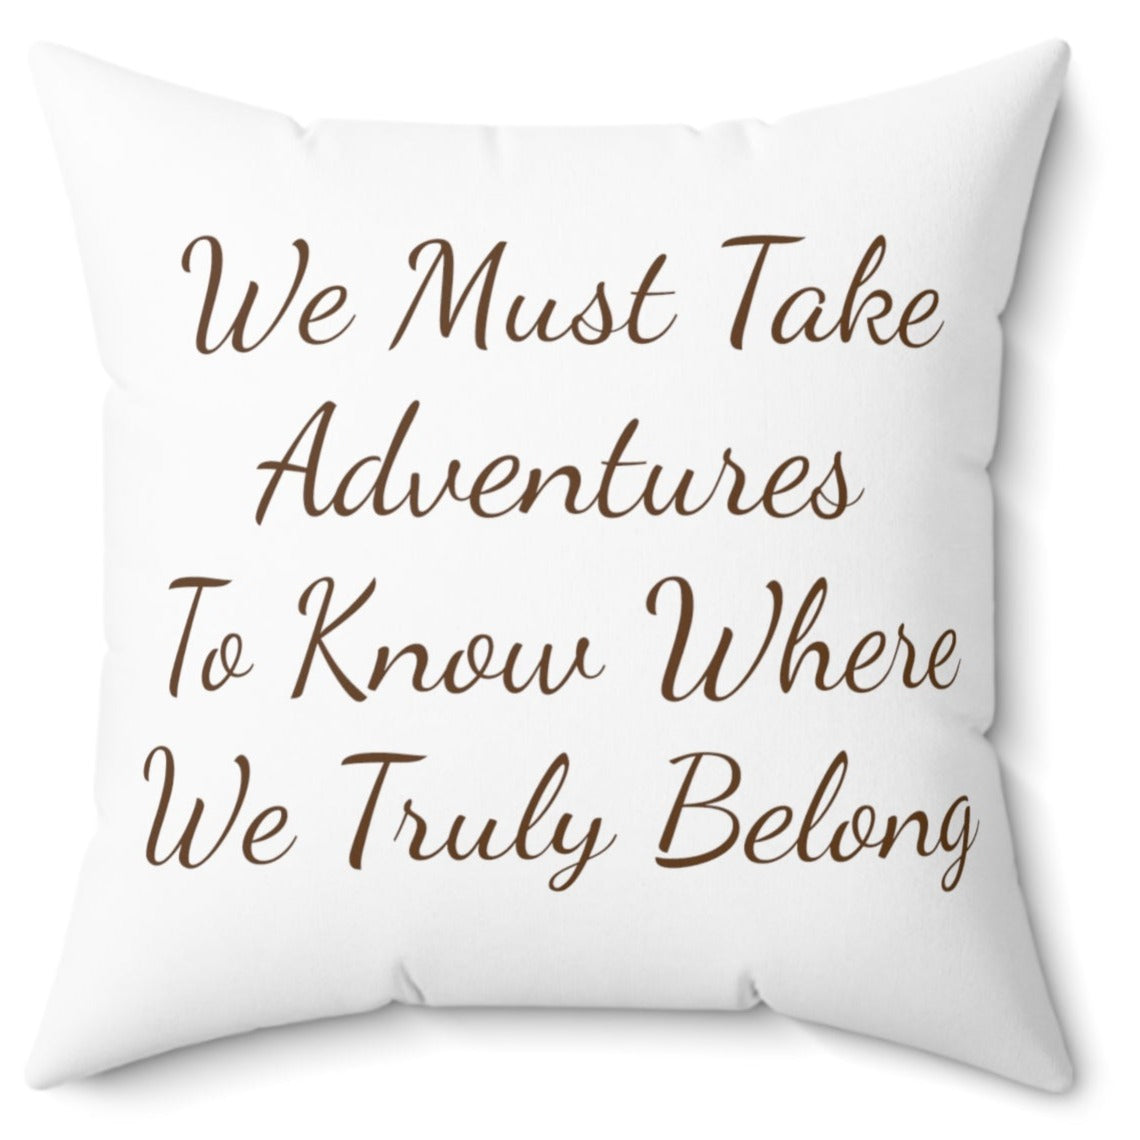 New Adventures Manatee Pillow | Pillows